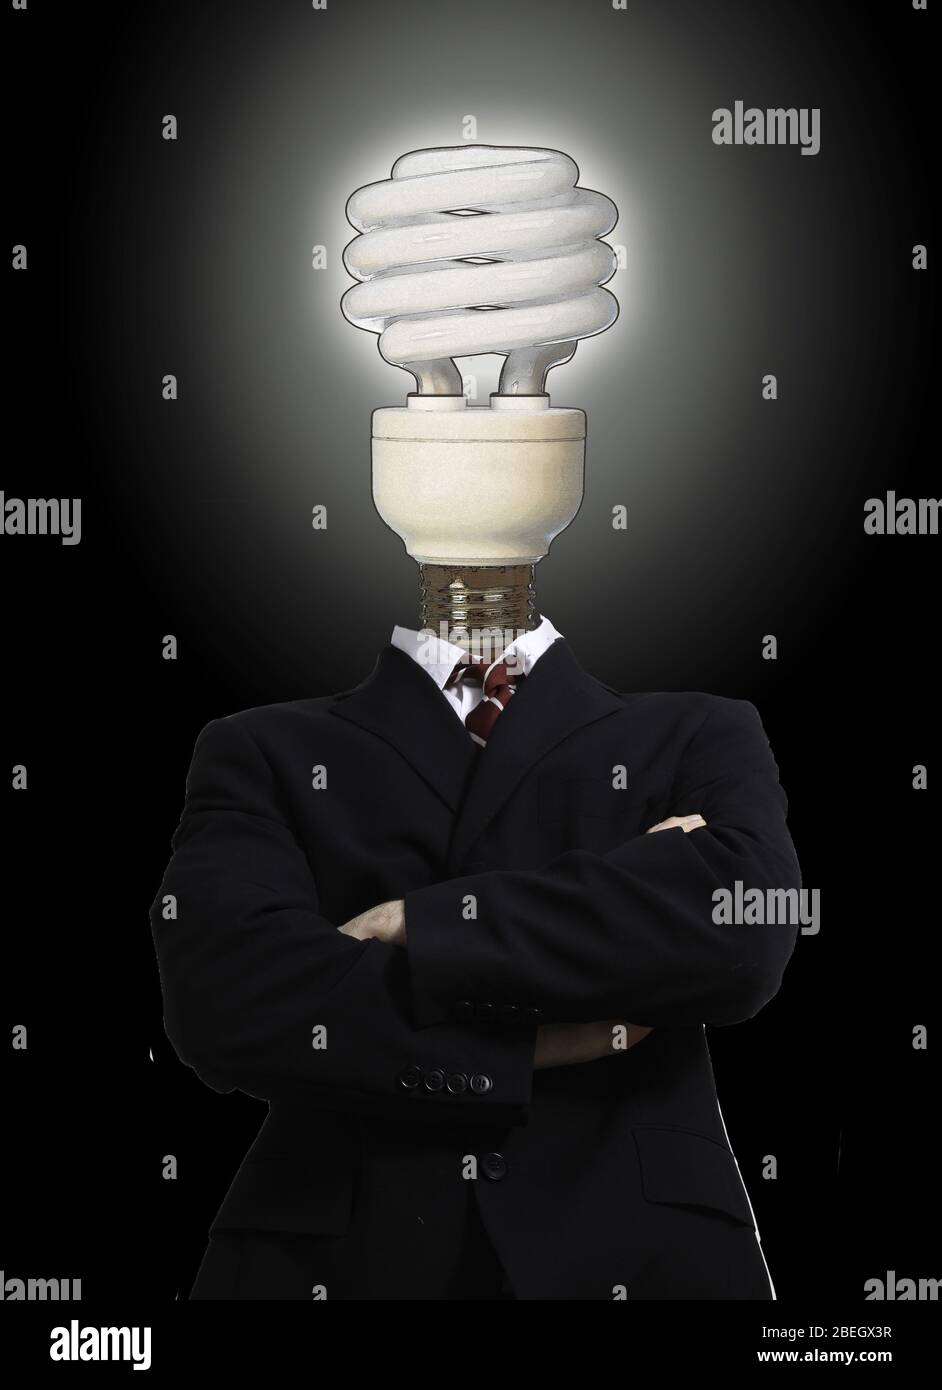 Intelligent Man, Conceptual Image Stock Photo